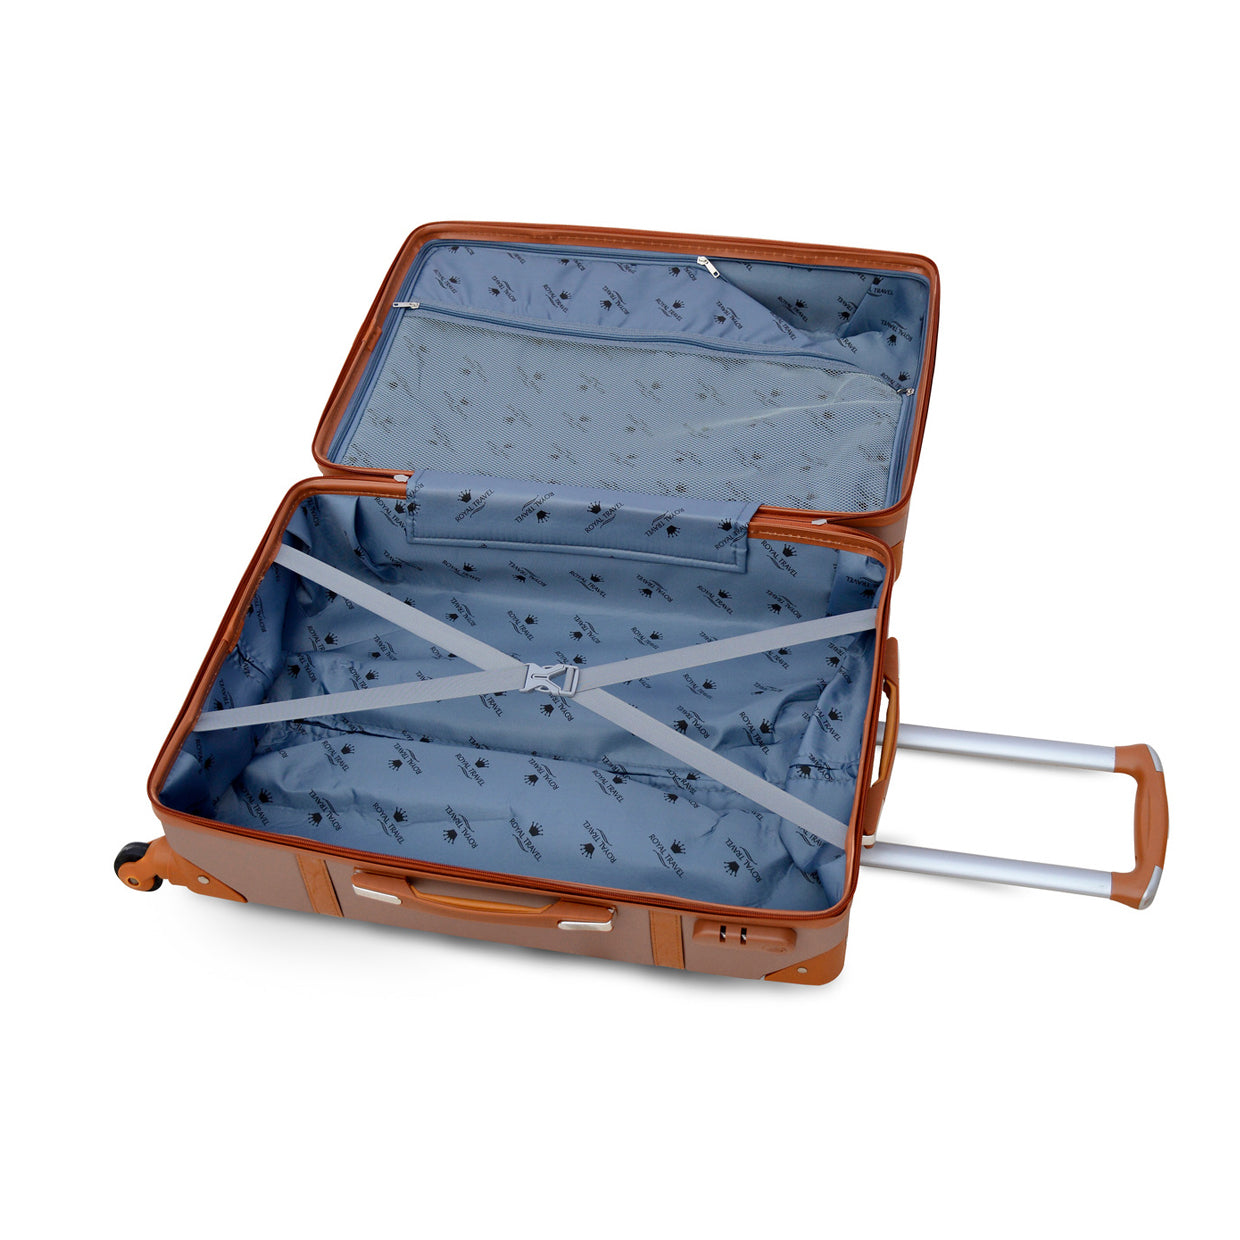 28" Lightweight ABS Corner Guard Luggage | Rose Gold Hard Case Trolley Bag